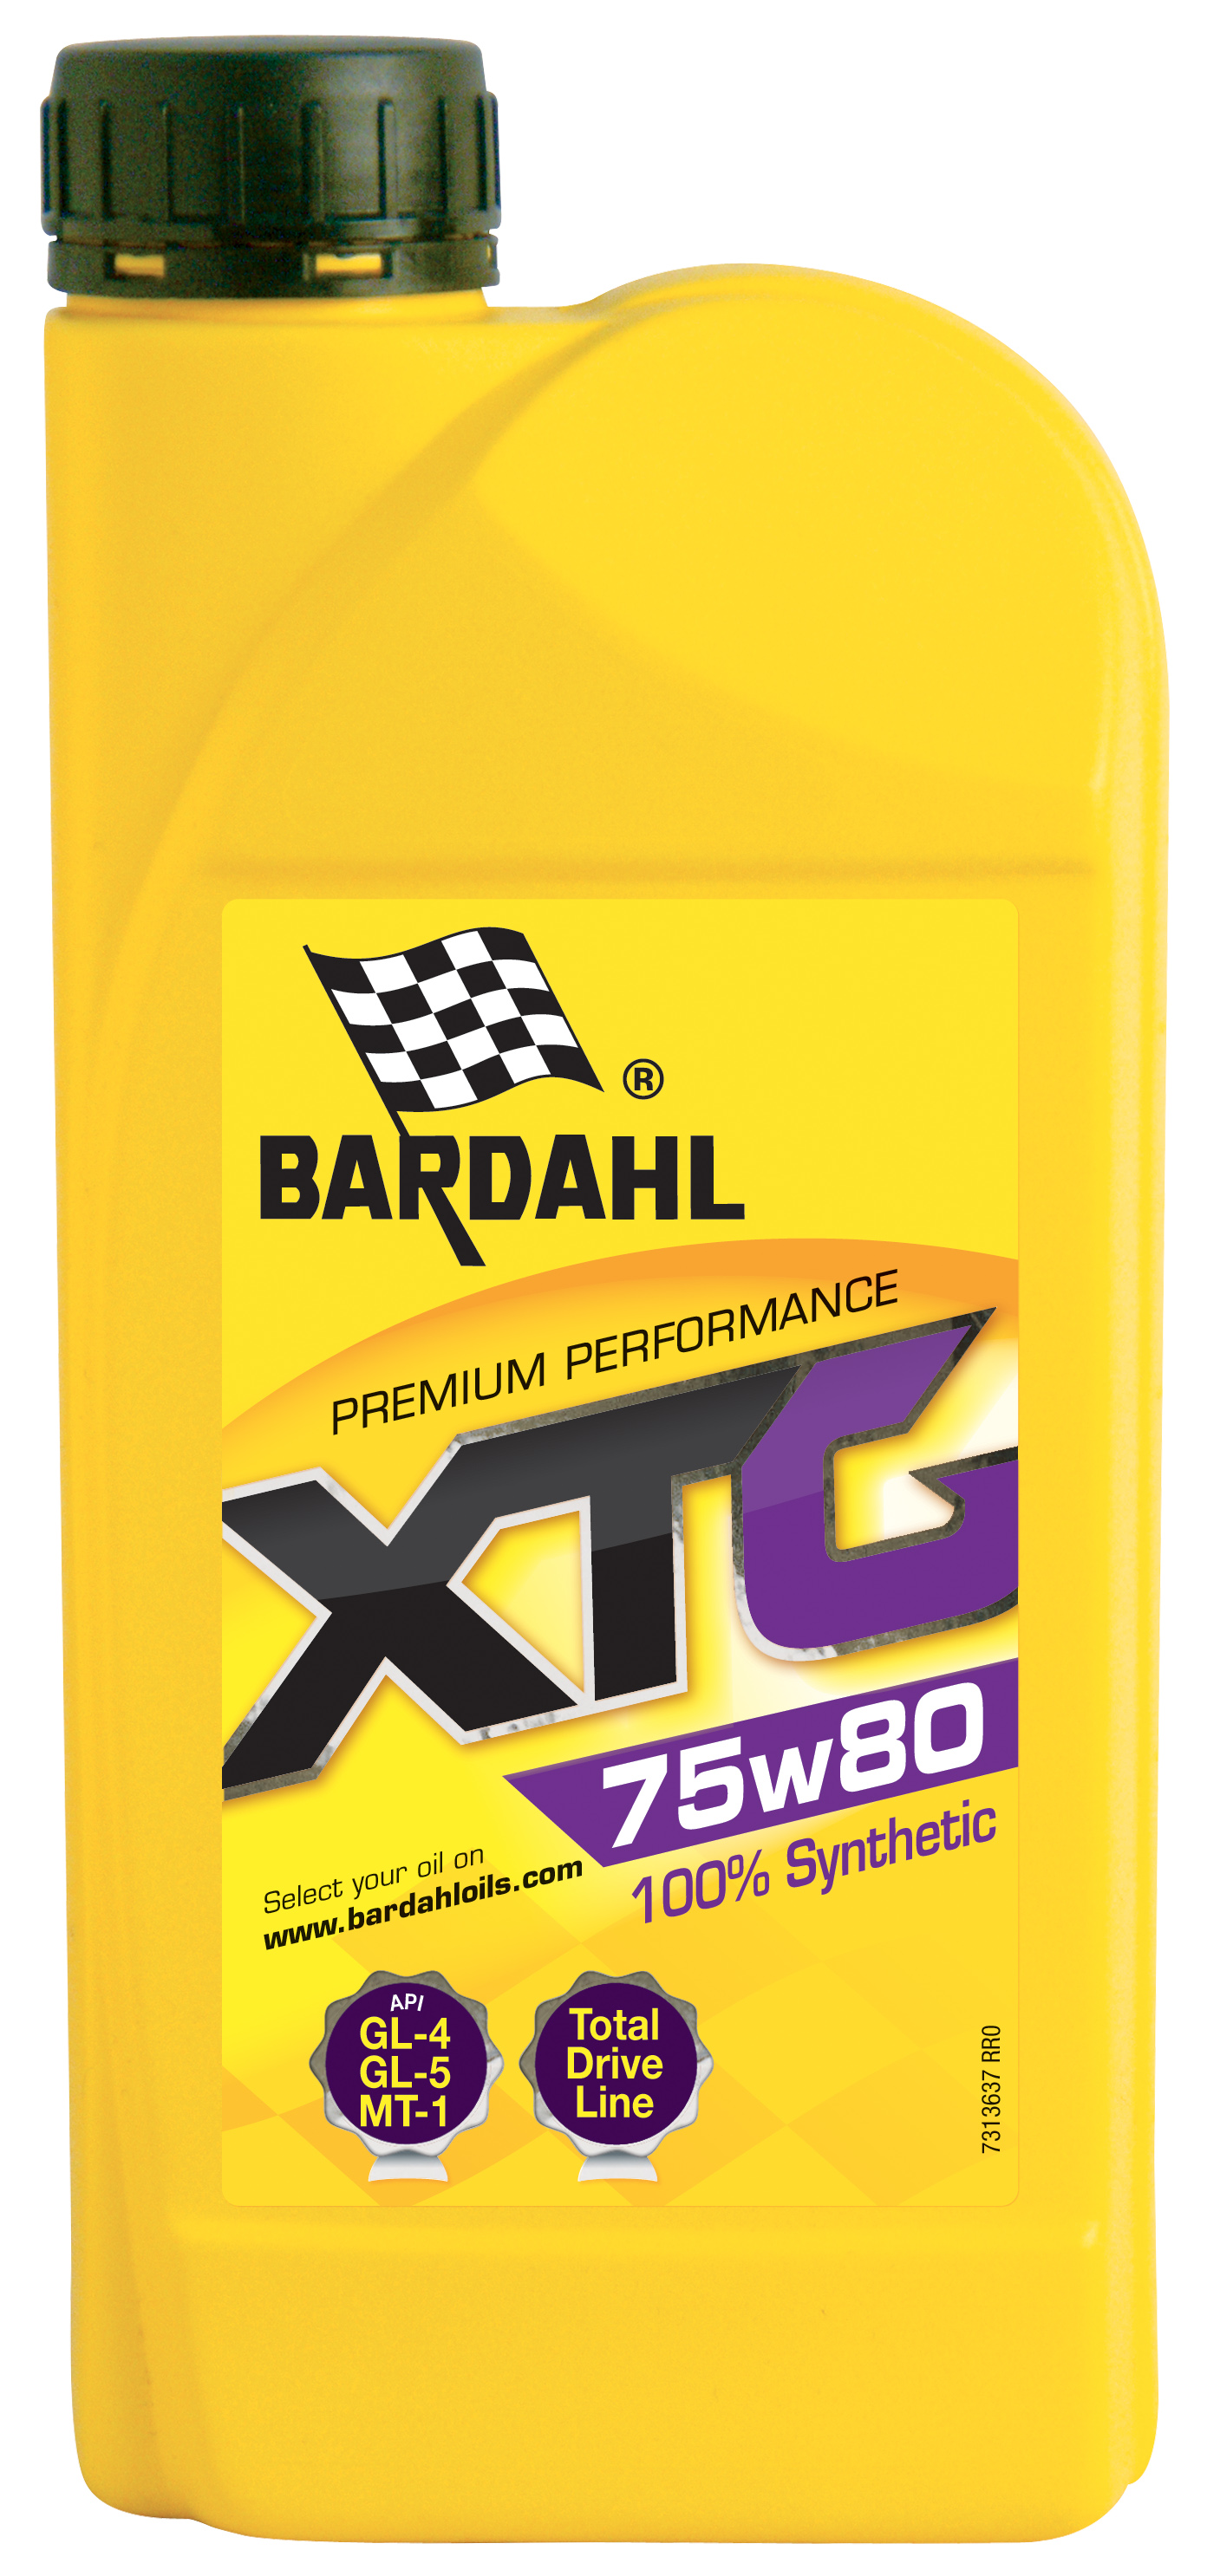 75w80 XTG GL4/GL5/MT-1 1L (синт. трансмиссионное масло) - BARDAHL 36371